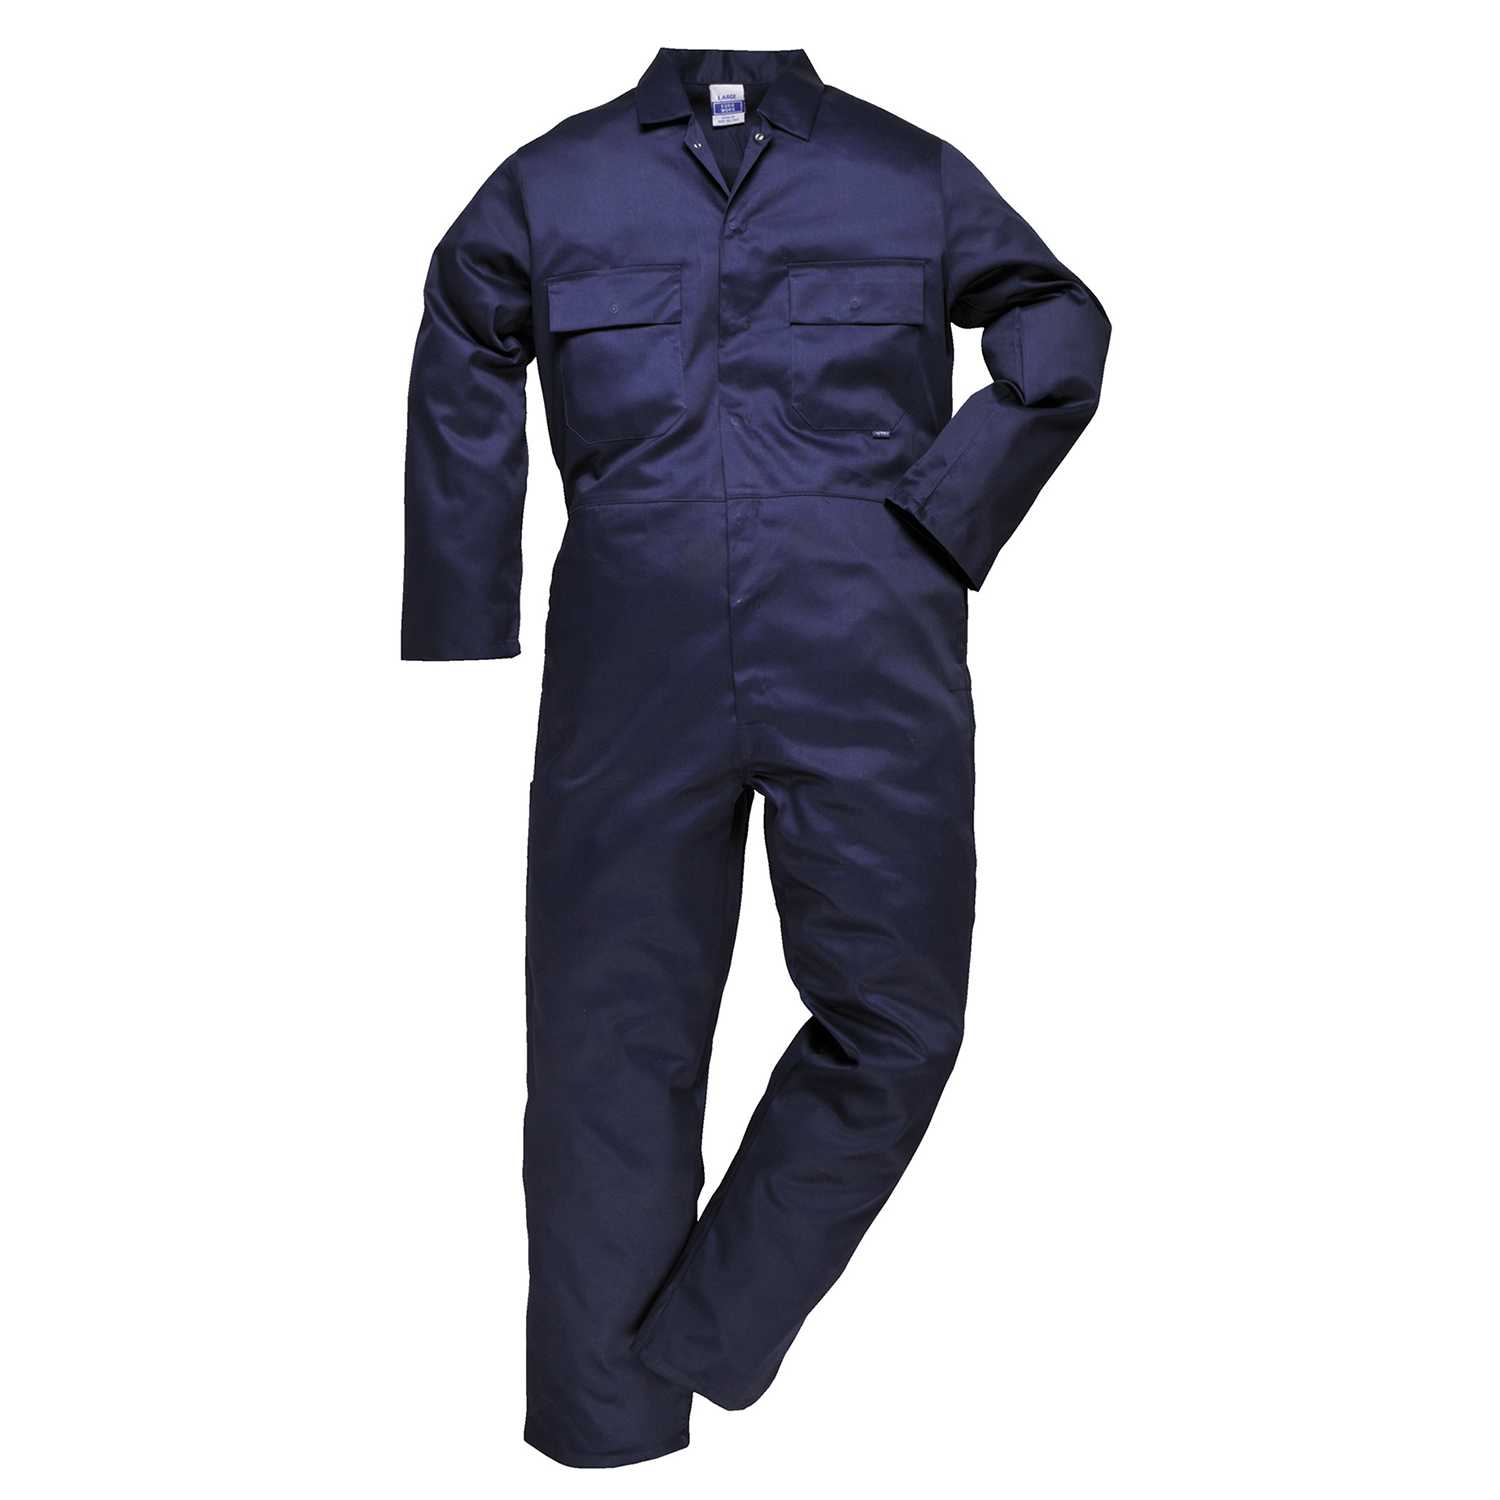 Work boiler suits